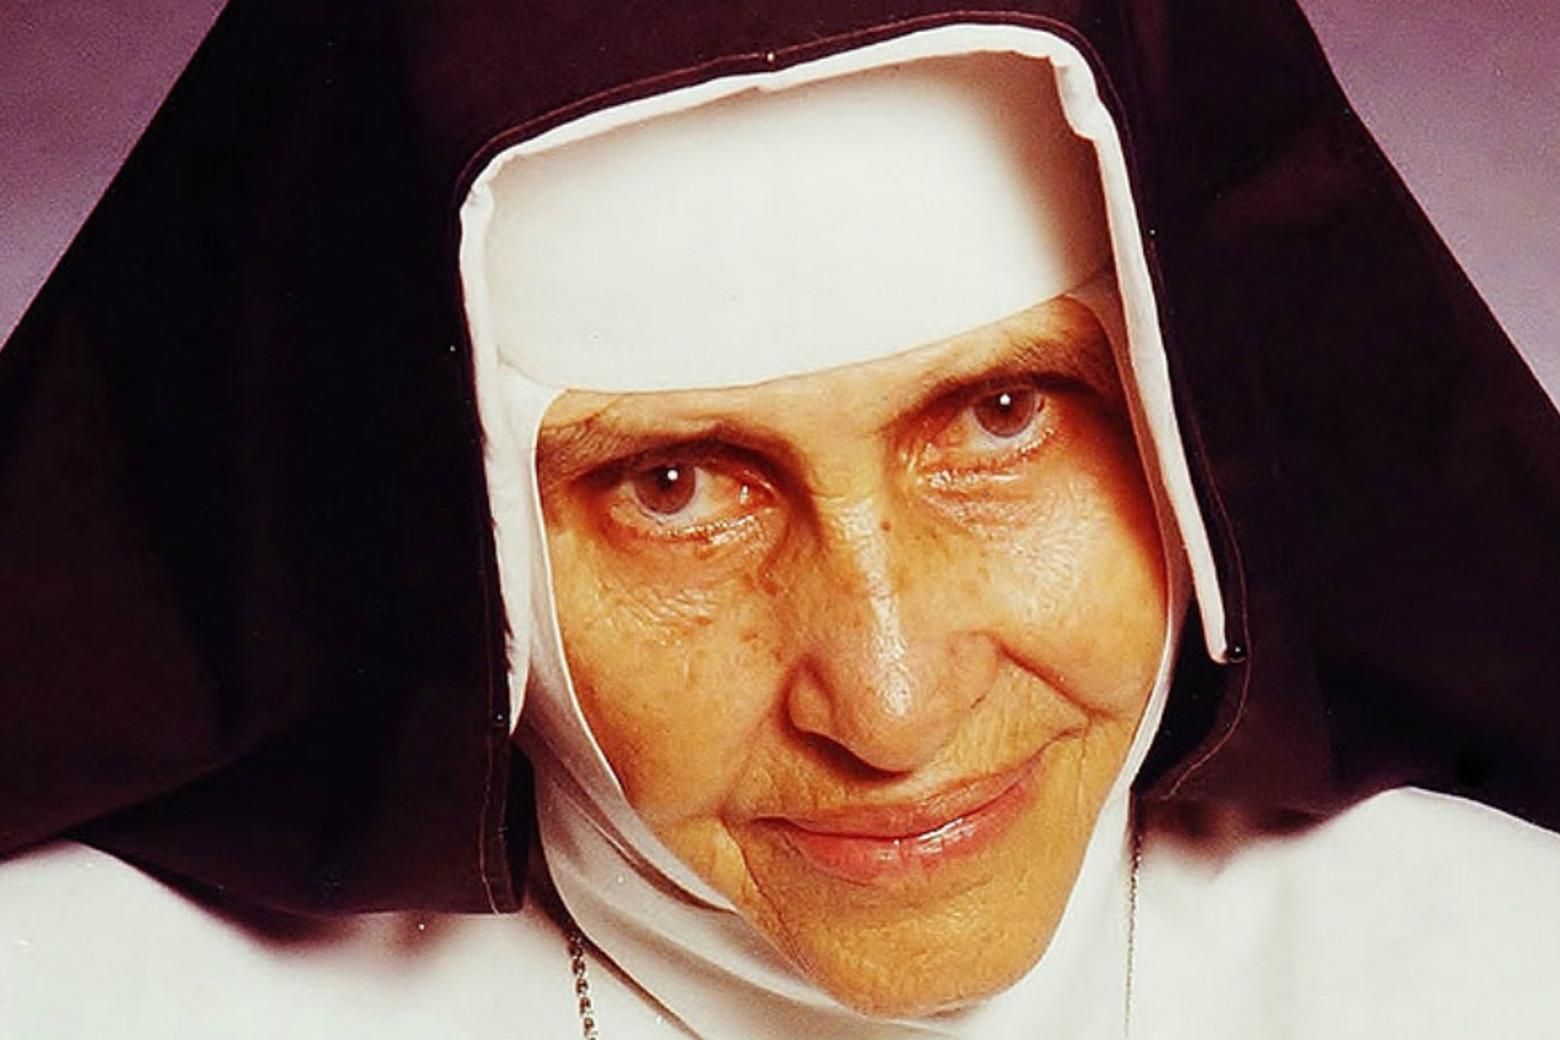 Vaticano reconhece milagre e Irmã Dulce será proclamada santa